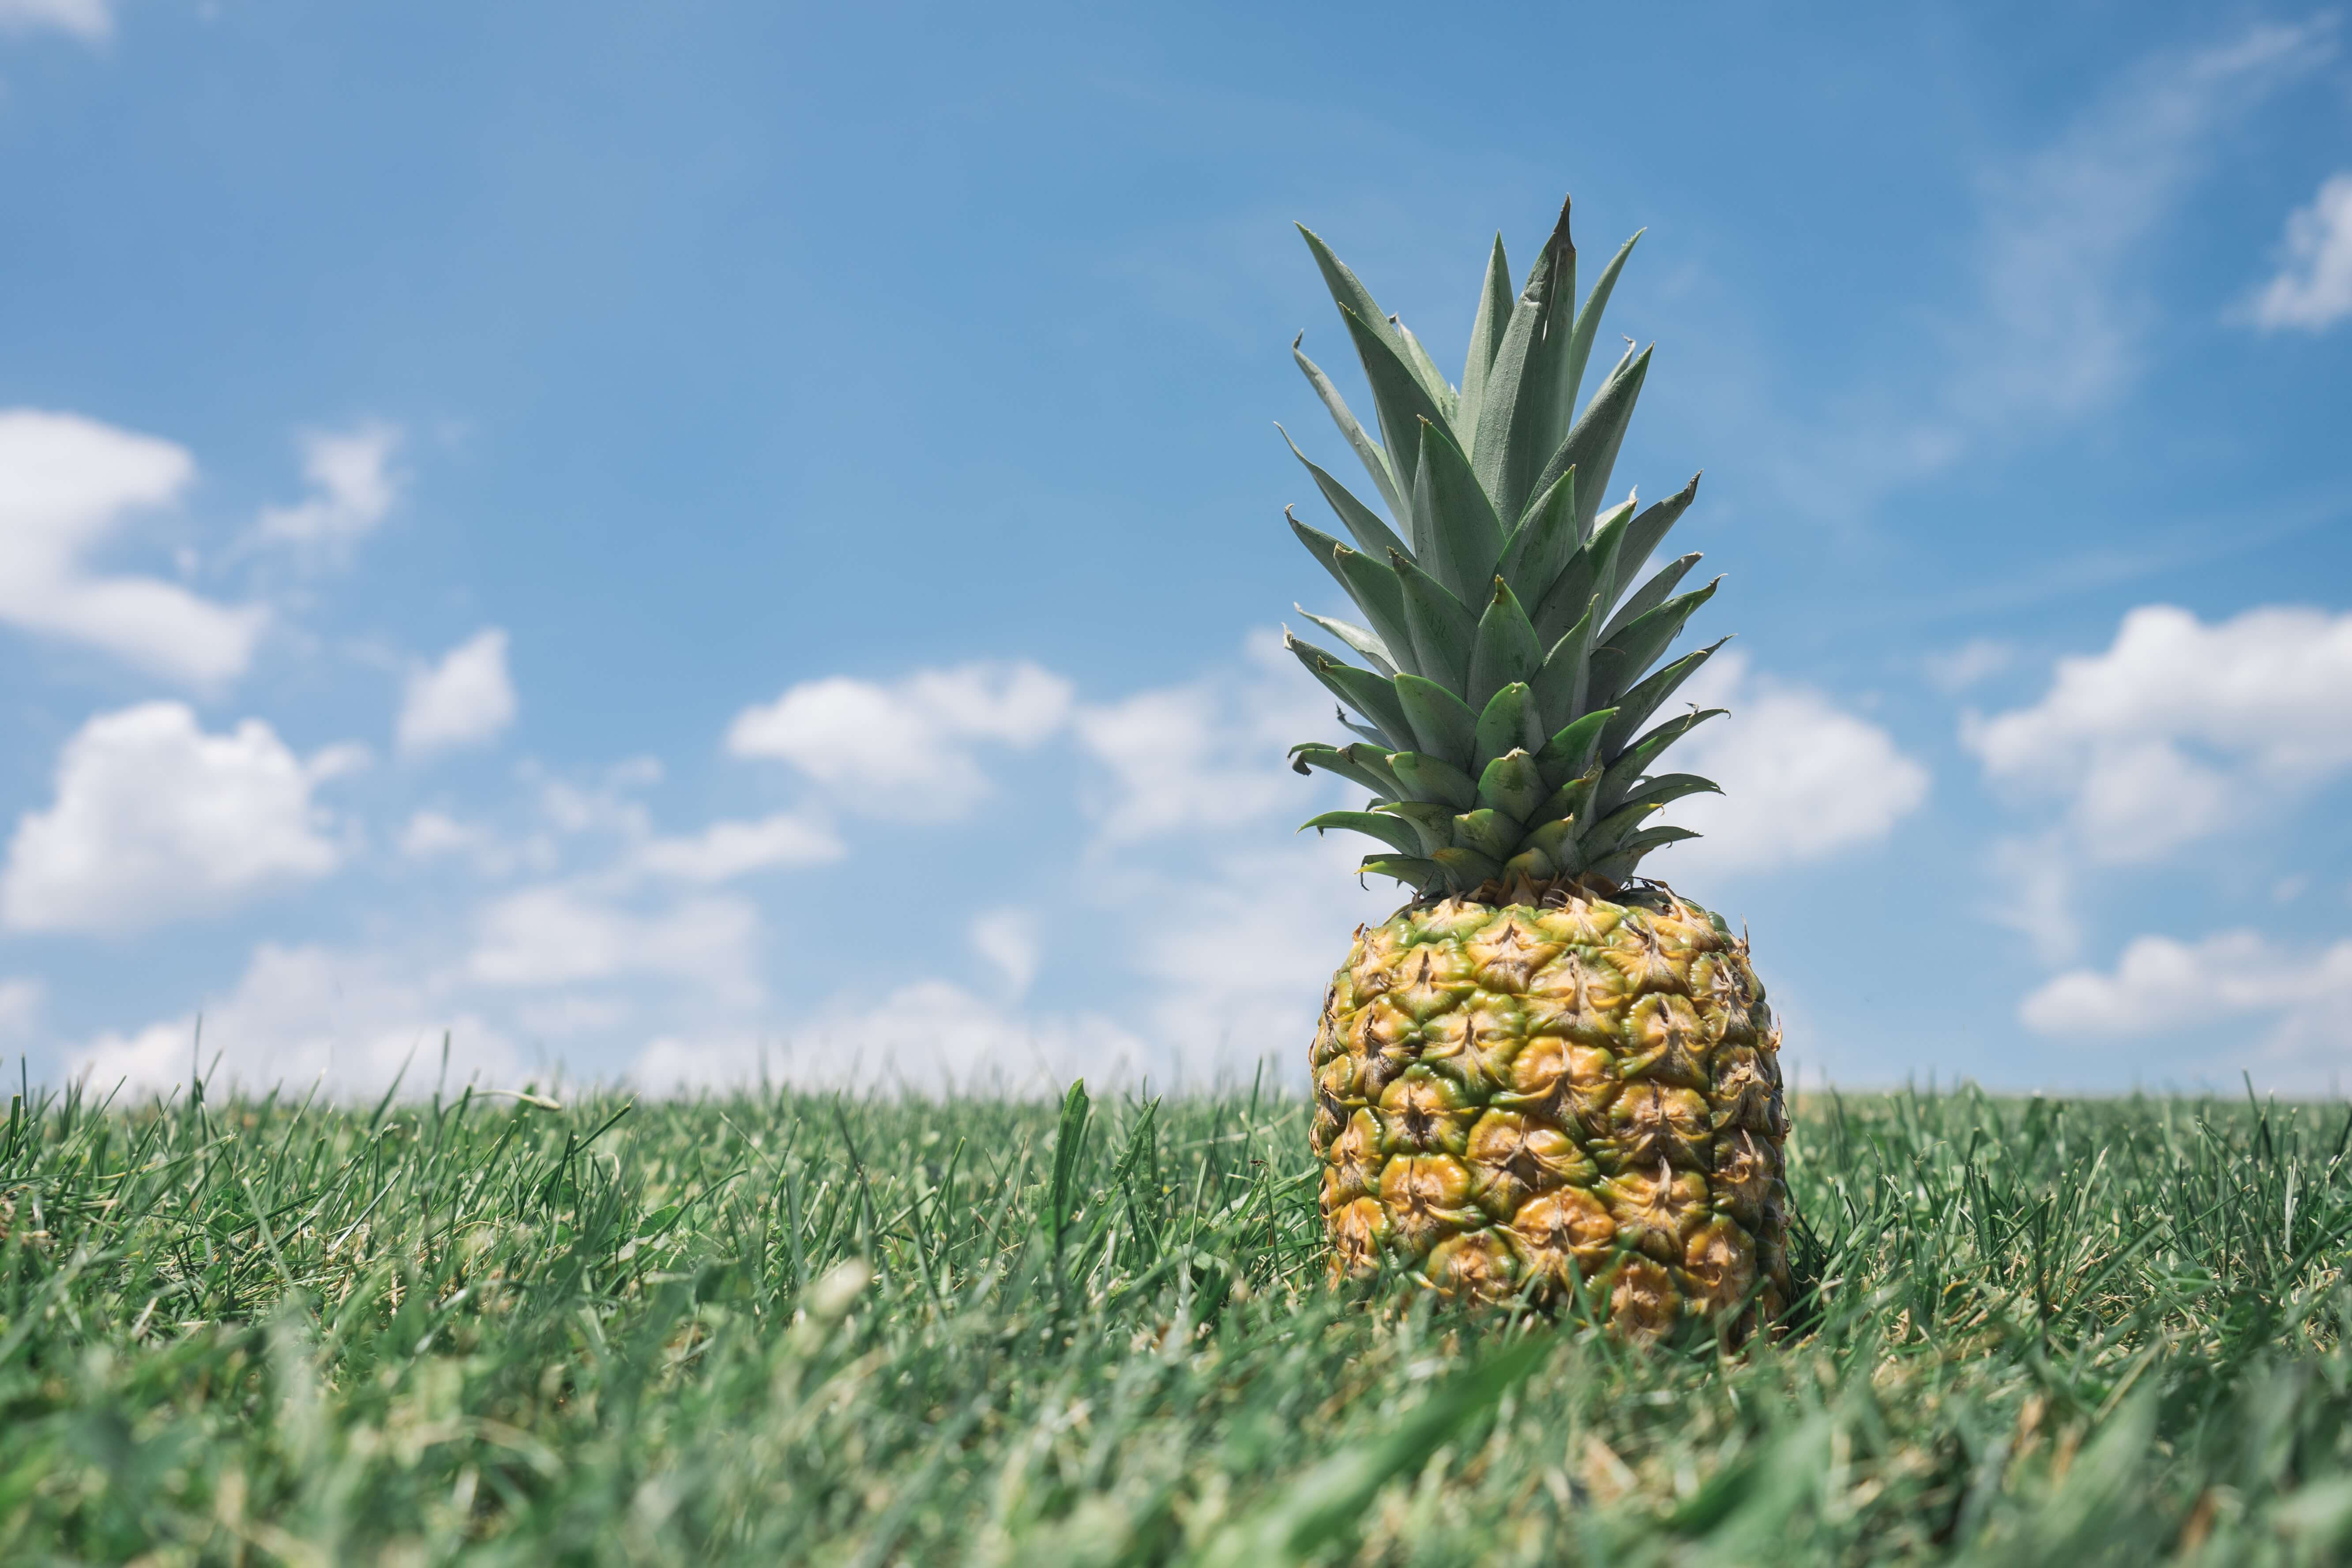 A pineapple in a field